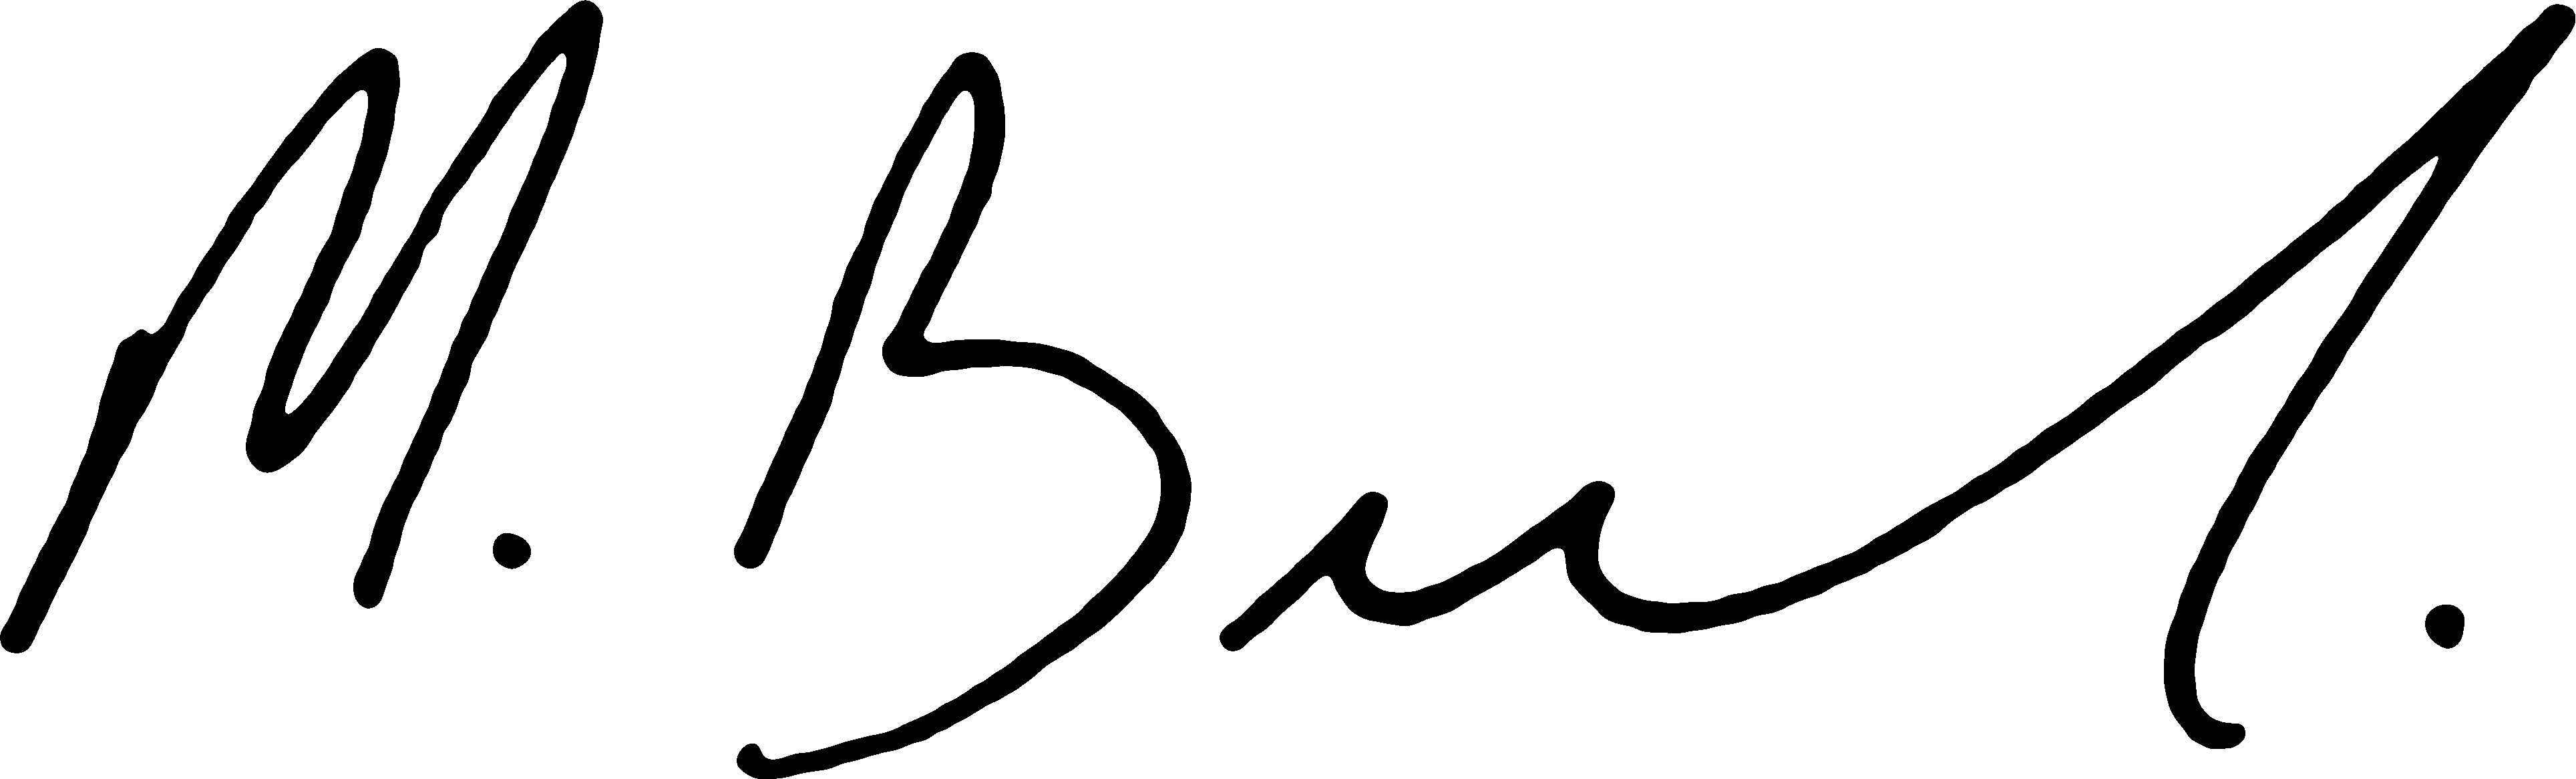 Michael Benarroch's signature.